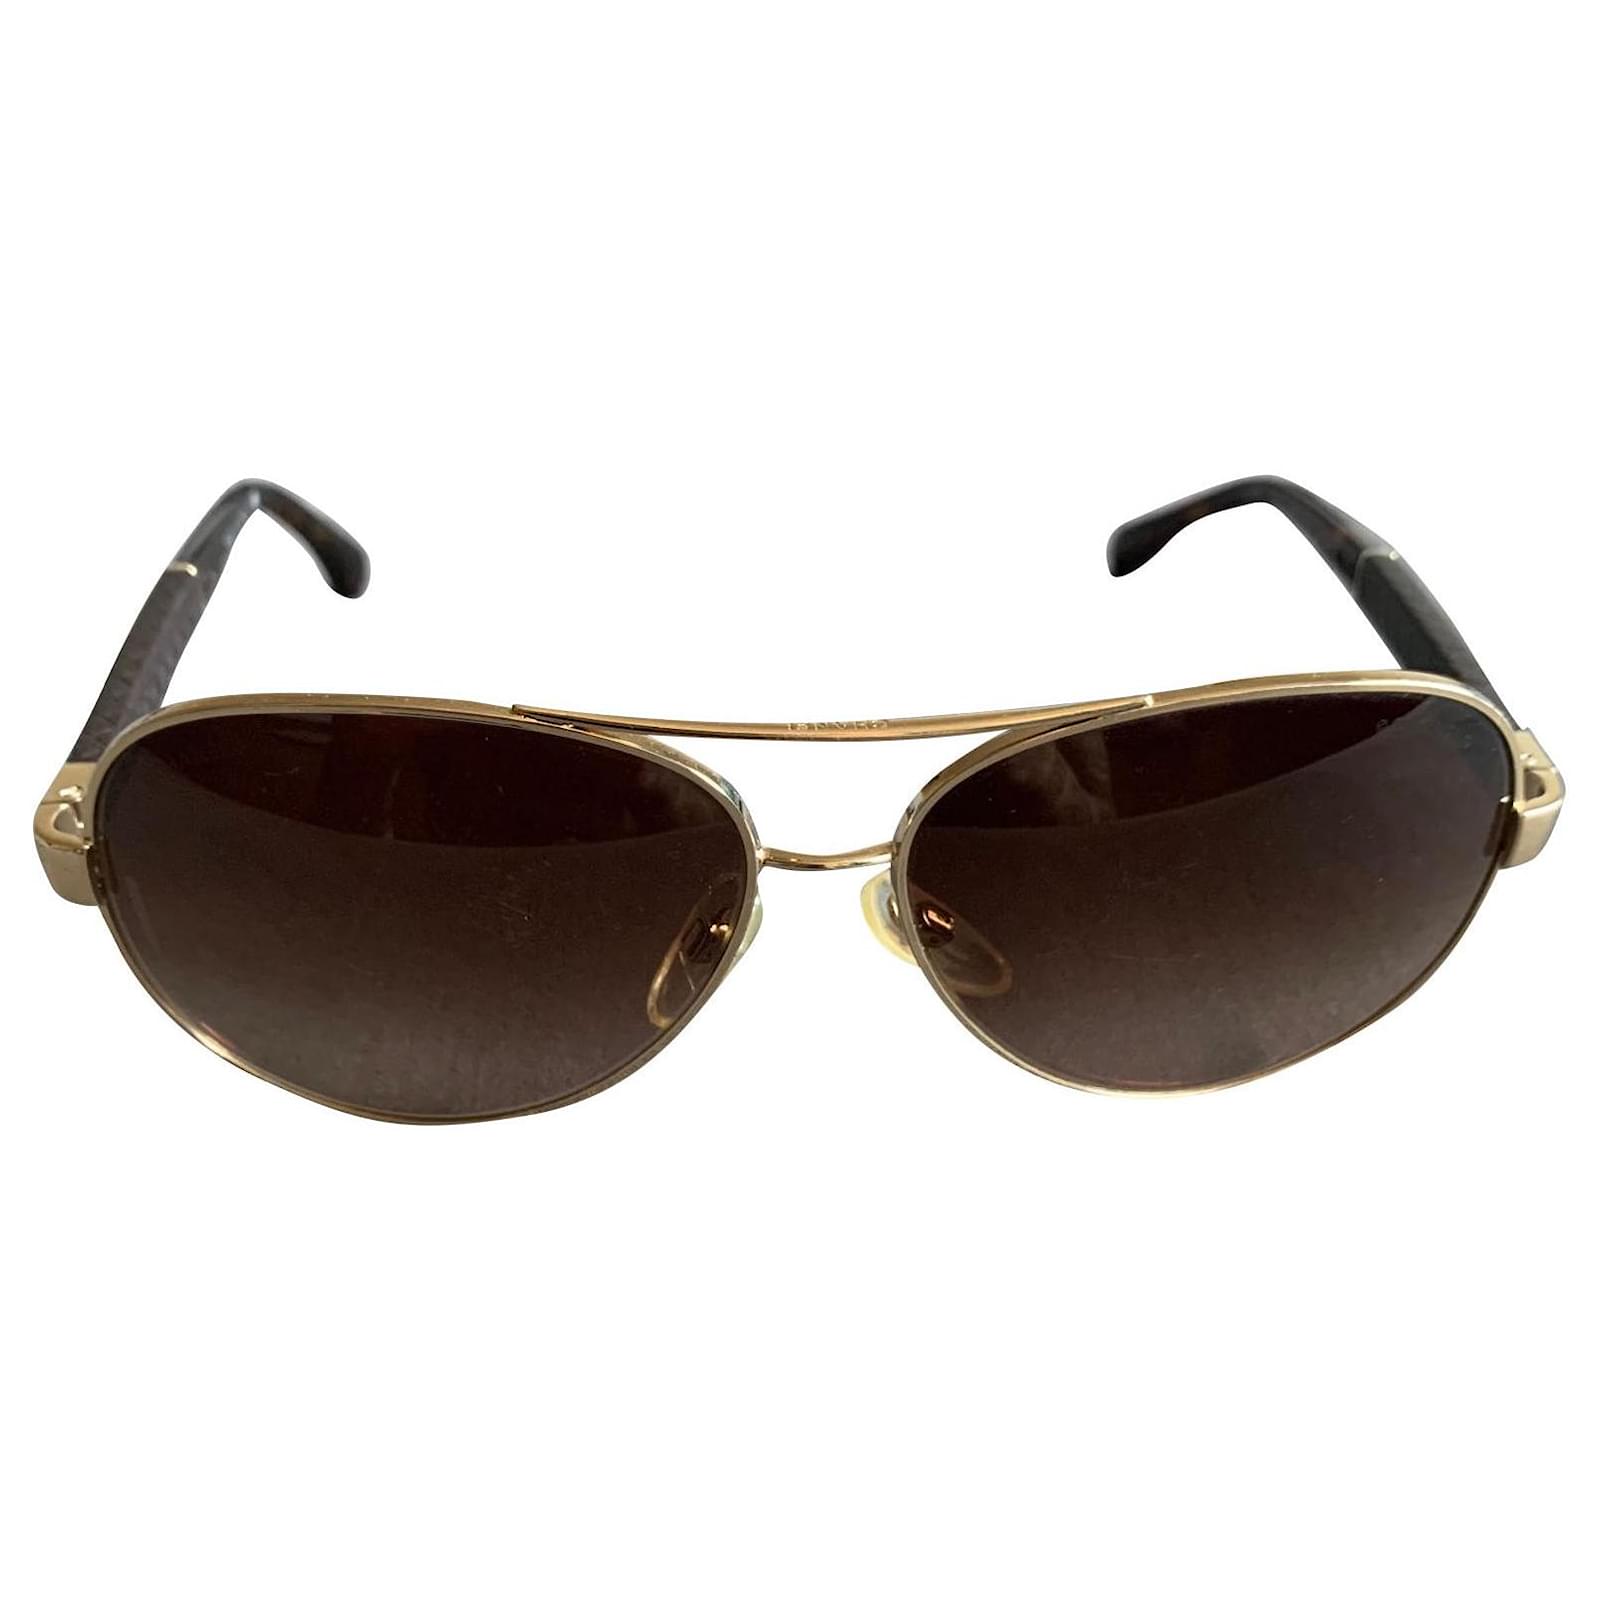 gold chanel aviator sunglasses